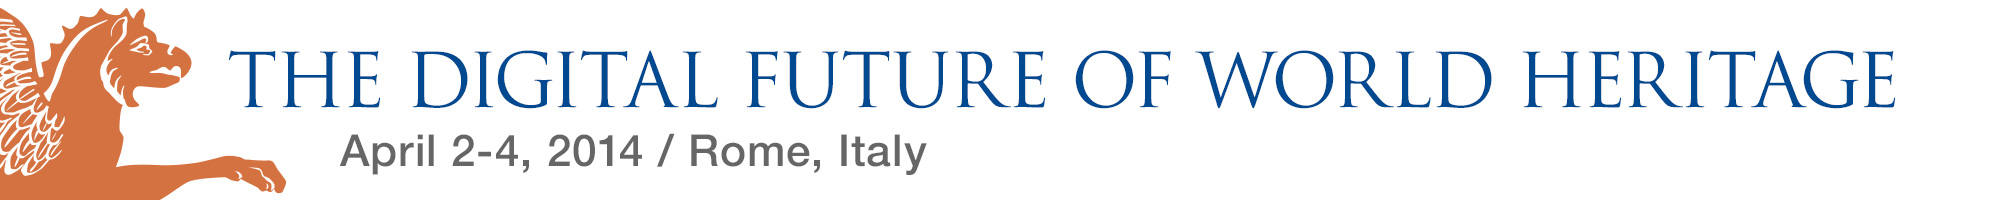 The Digital Future of World Heritage 2014 logo